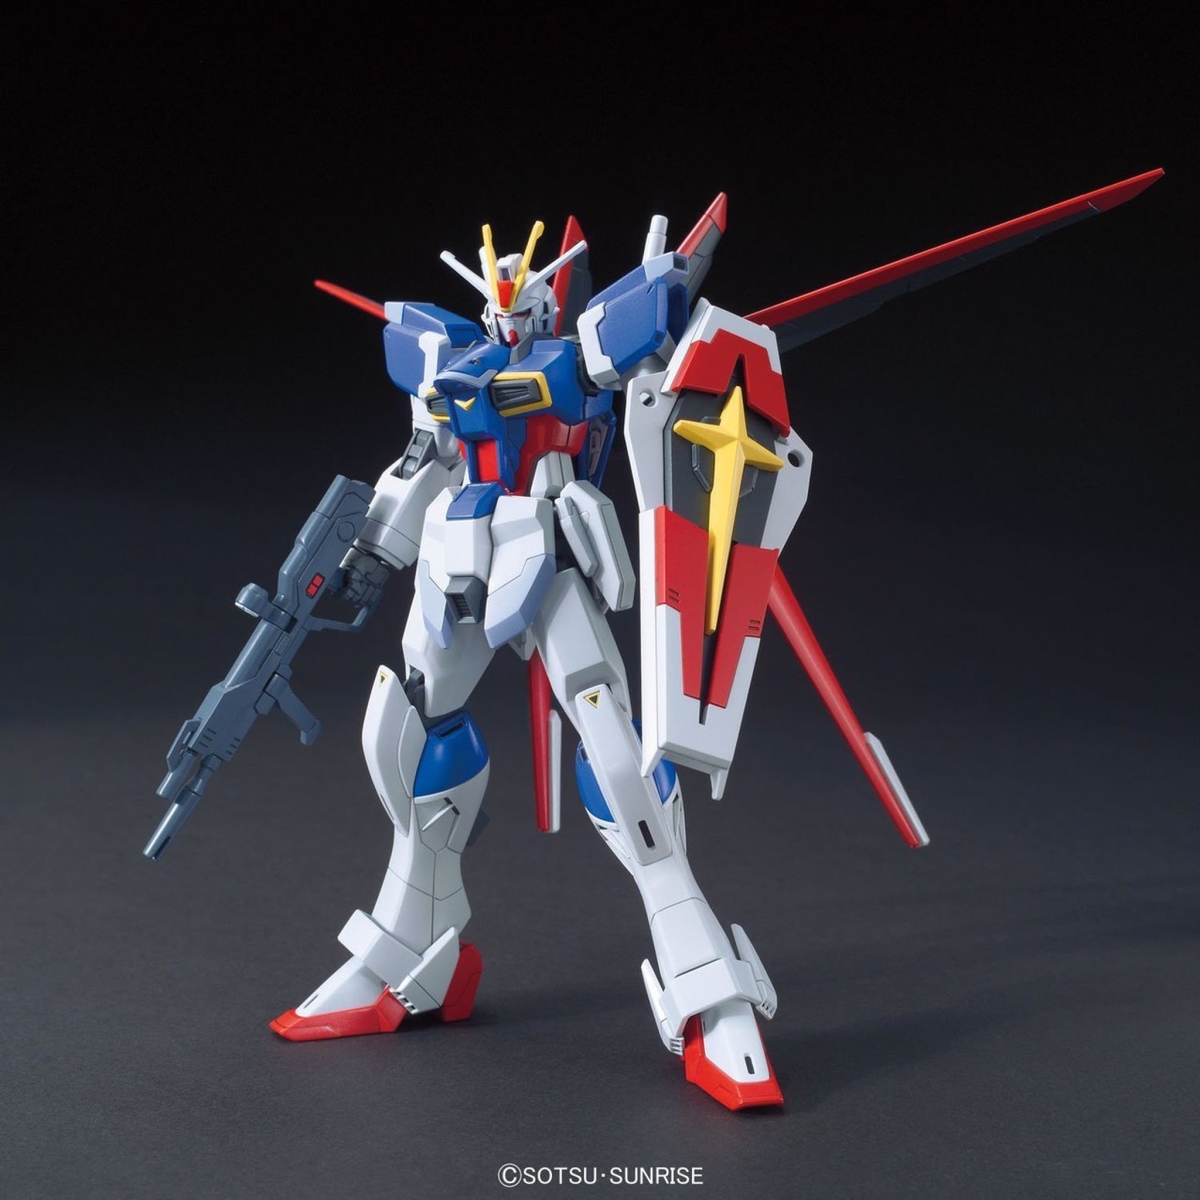 Ban206326 No.198 Zgmf-x56s & A Force Impulse Gundam Hgce Model Kit From Gundam Seed Destiny